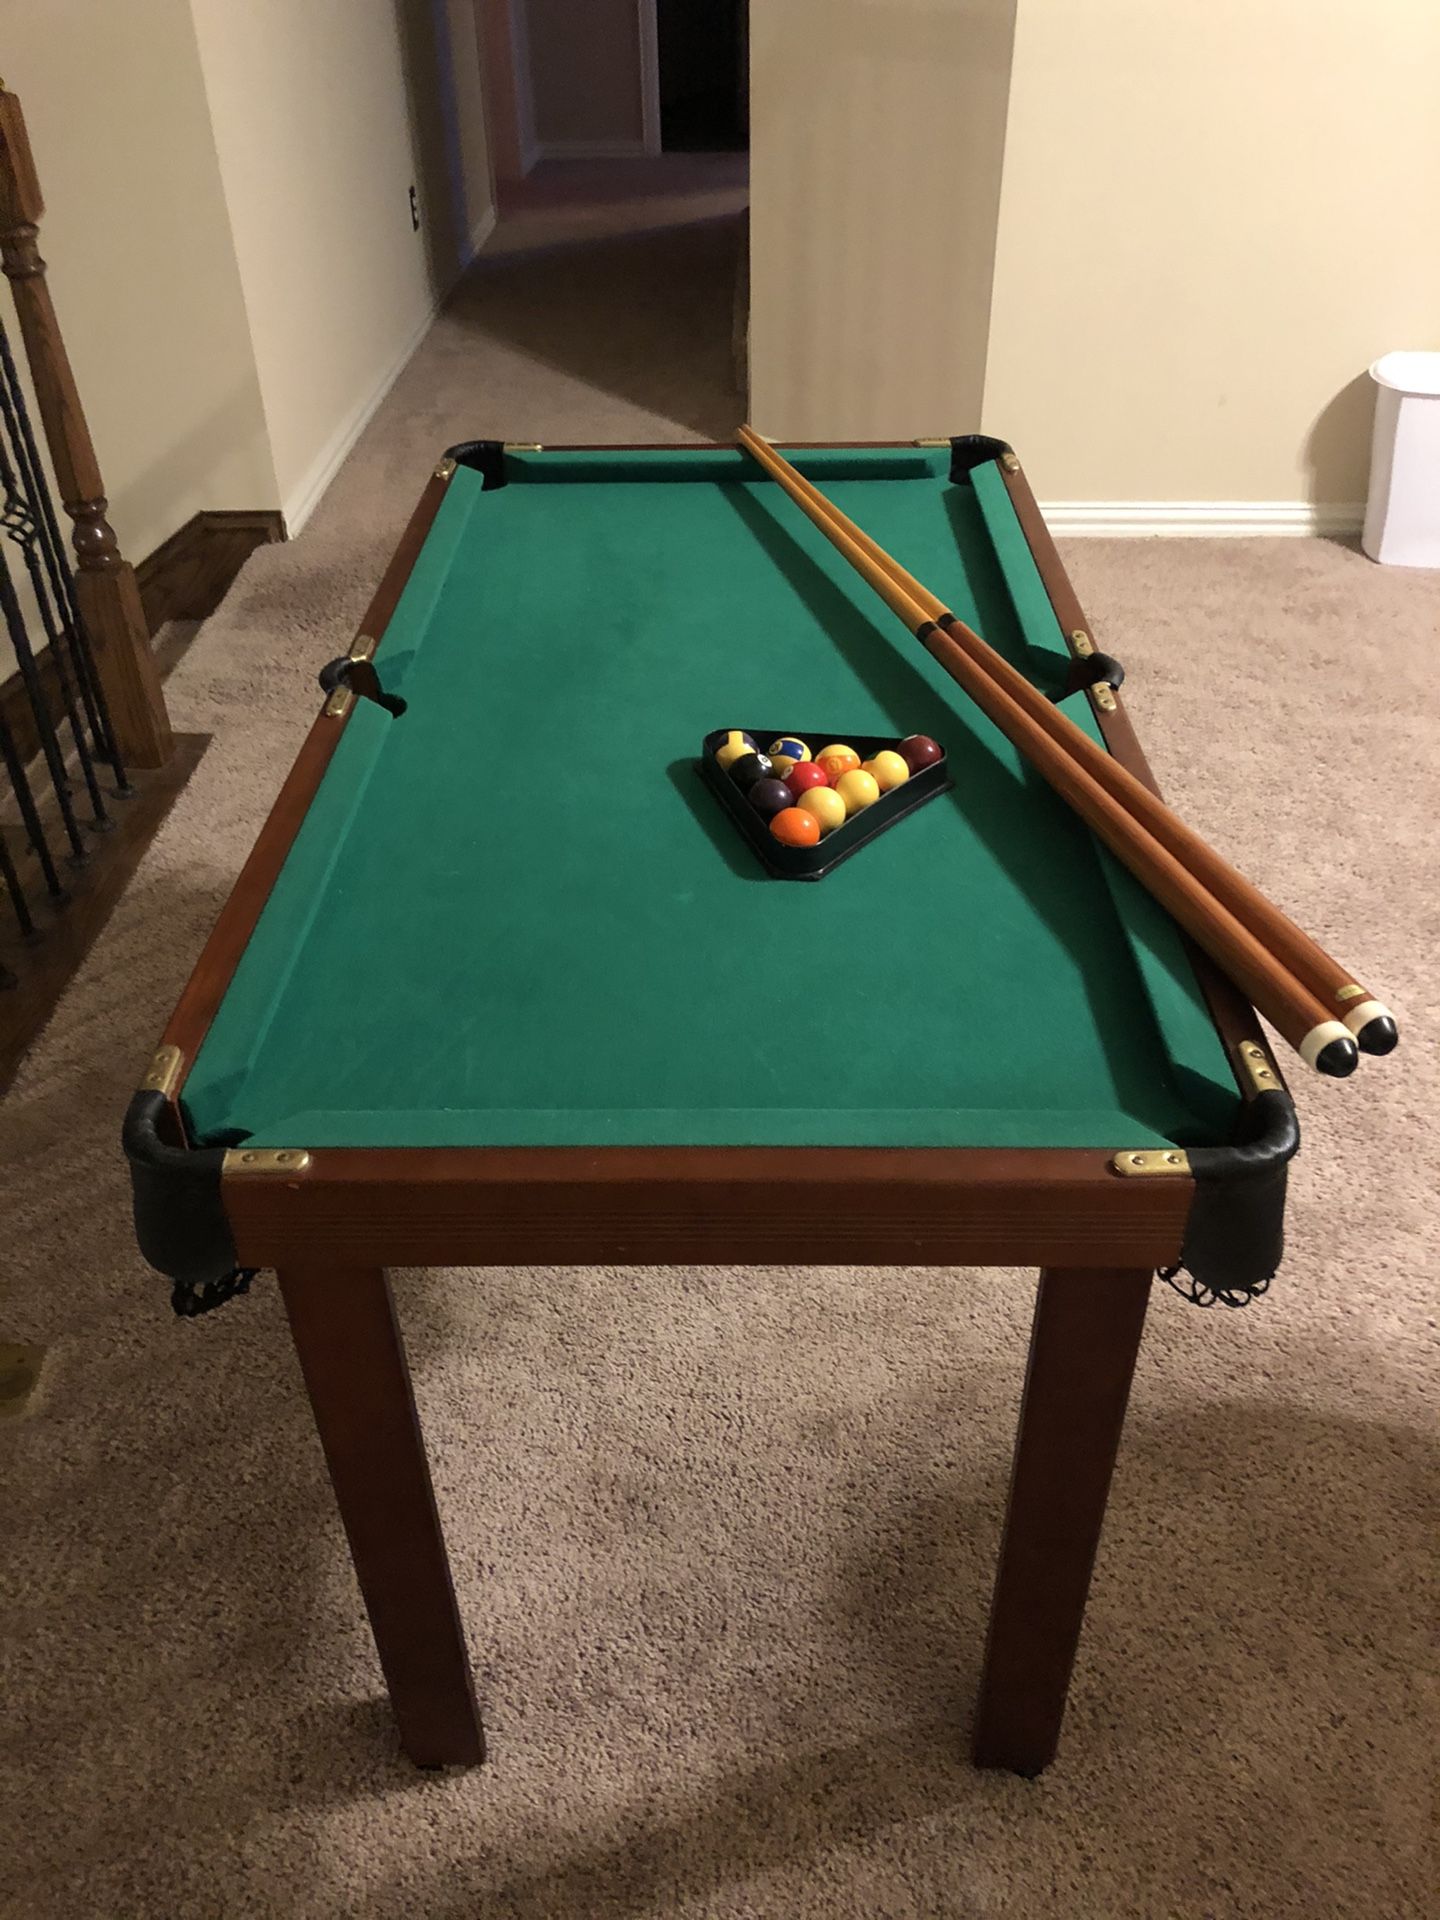 Mini pool table 6 games in one